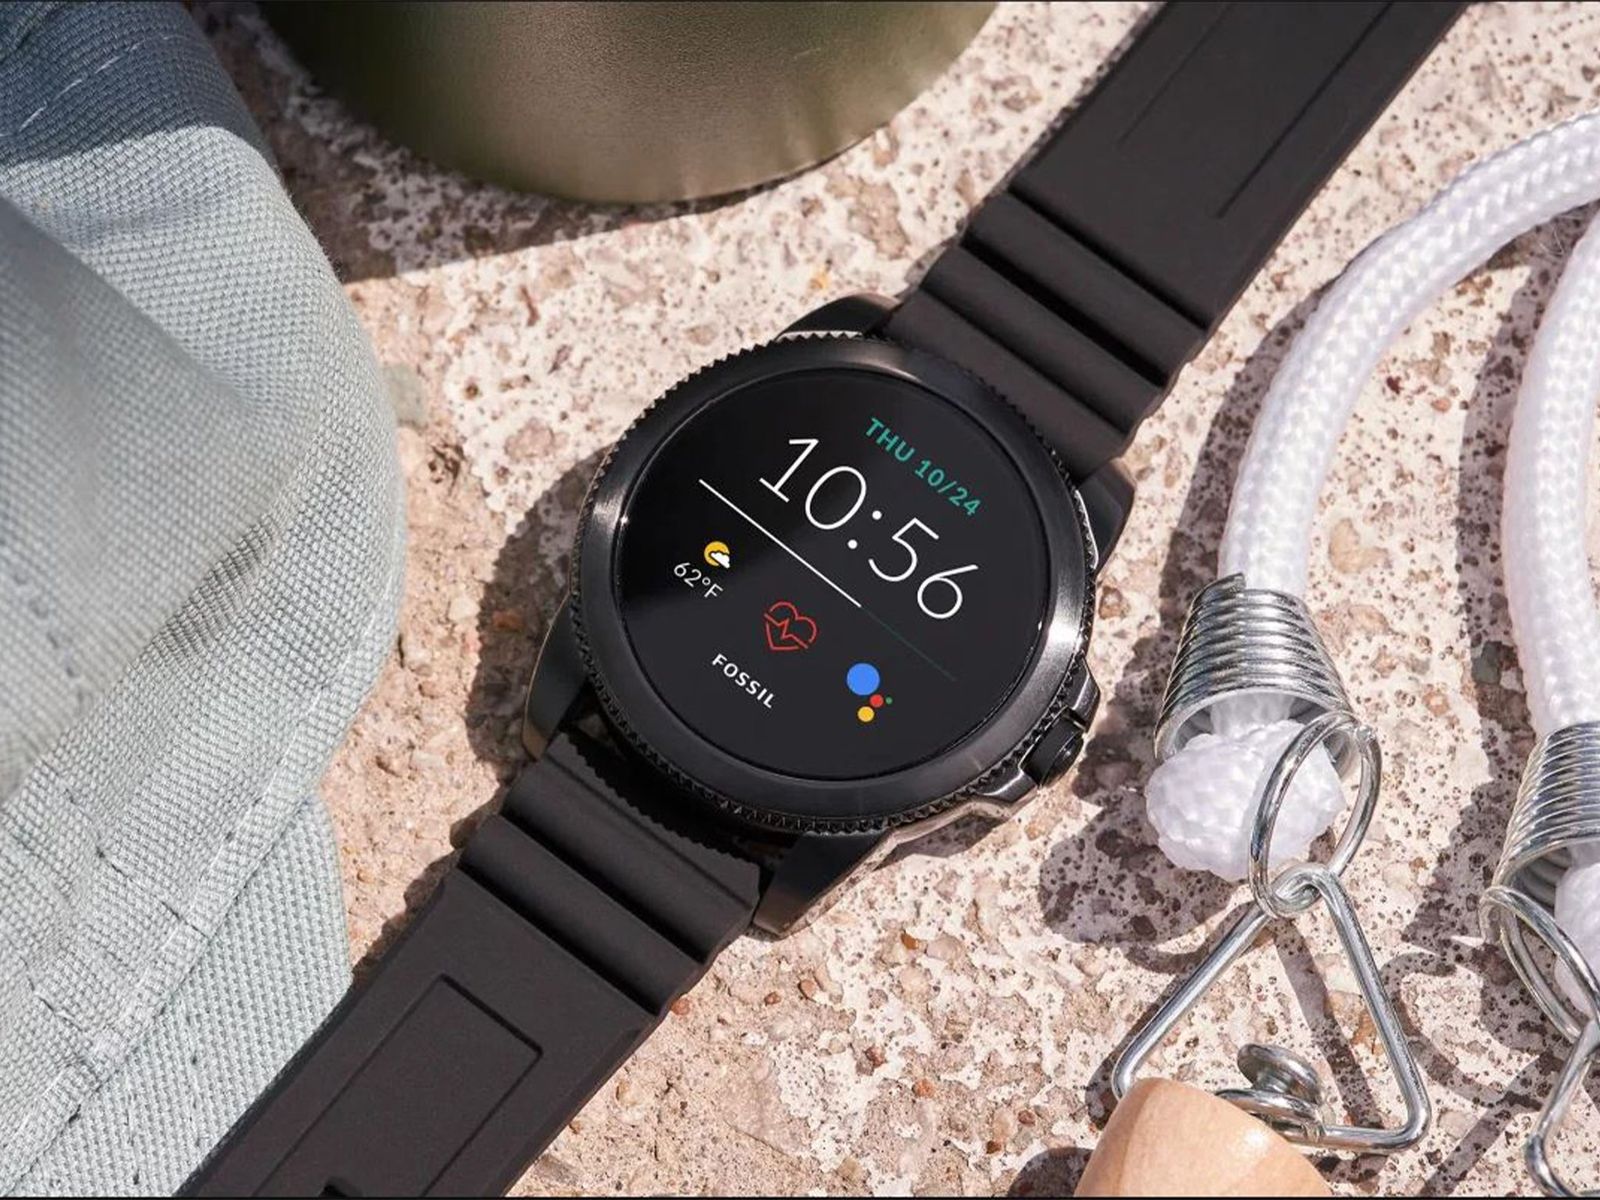 Wear os watches. Wear os часы. Watch s1 Active. Xiaomi watch s1 Active на руке. Xiaomi watch s1 Active на женской руке.